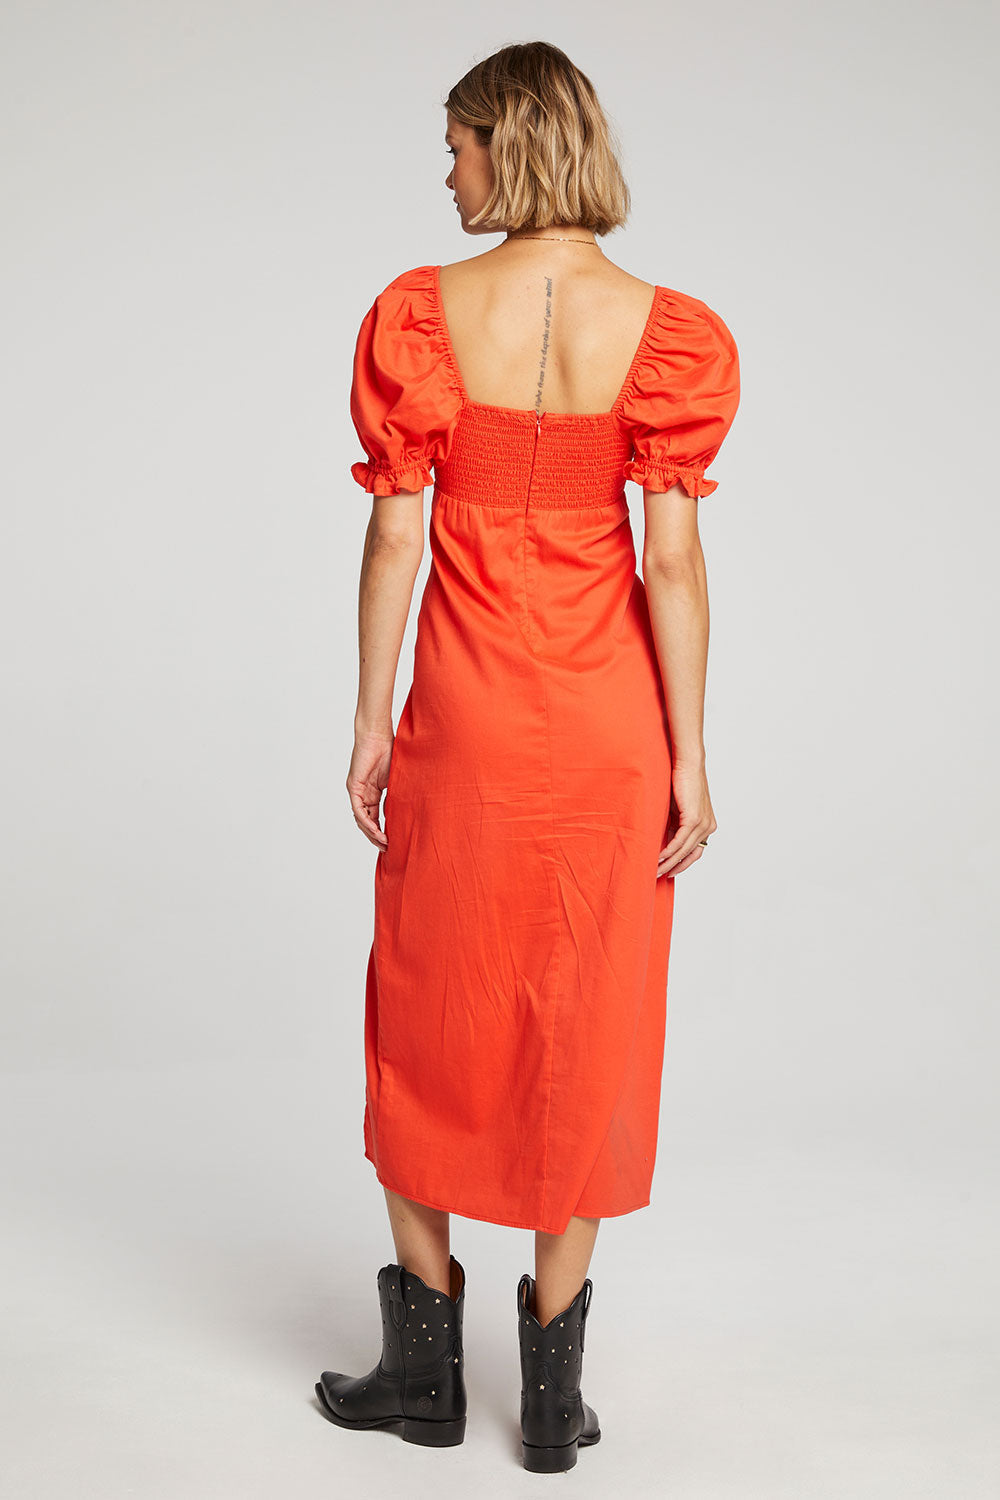 Saltwater LUXE | Alyvia Midi Dress | Flame Orange